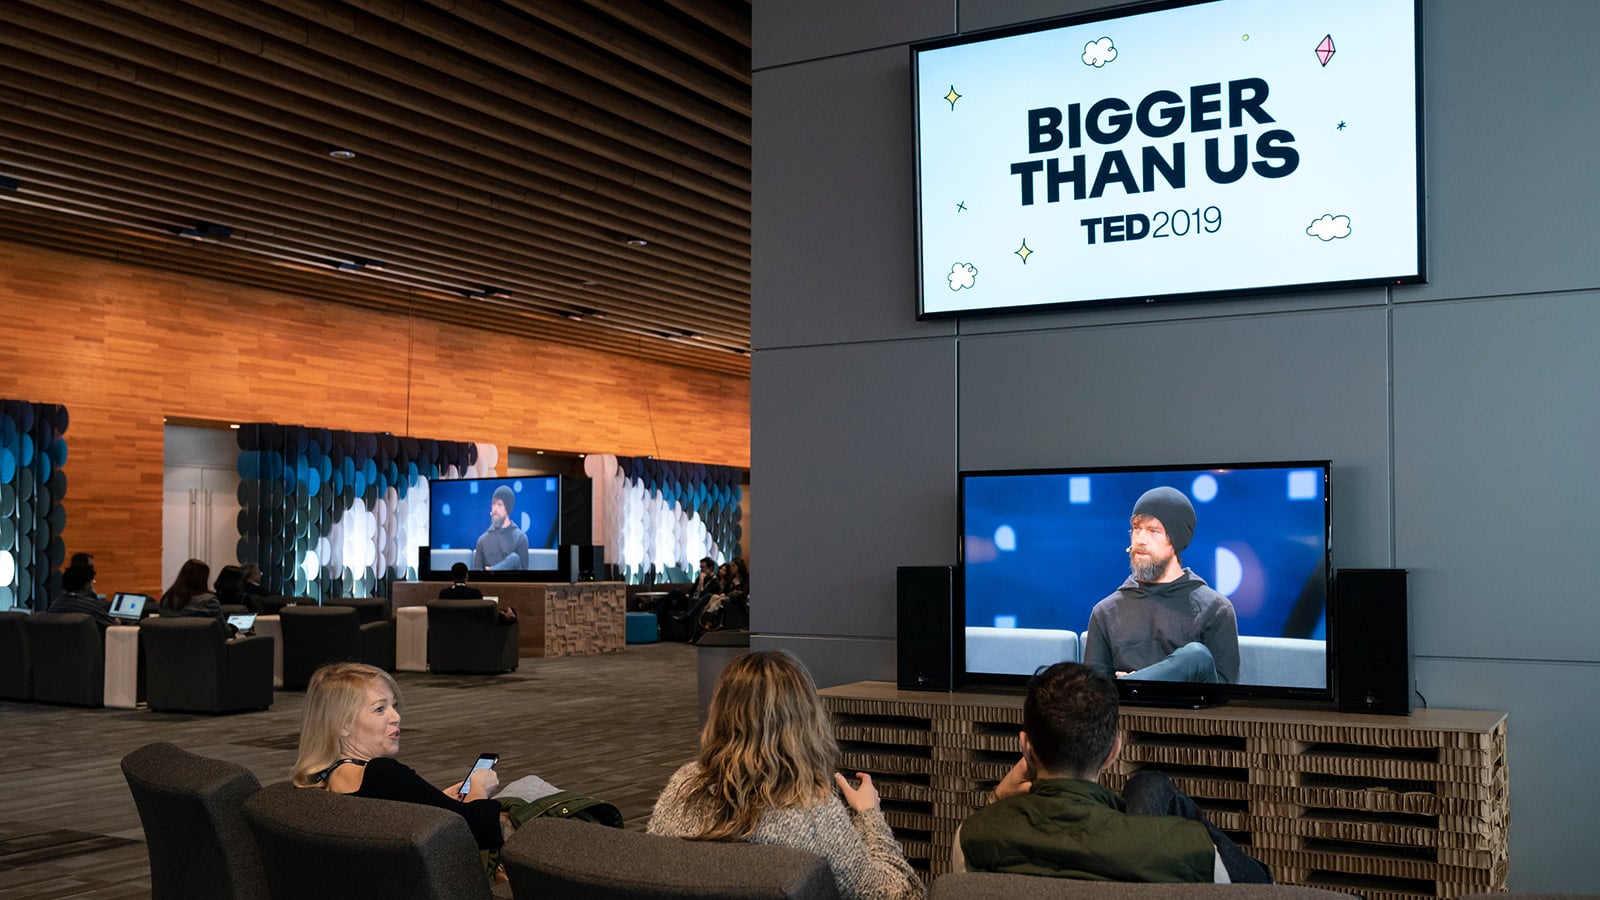 TED2019: Bigger Than Us. April 15 - 19, 2019, Vancouver, BC, Canada.